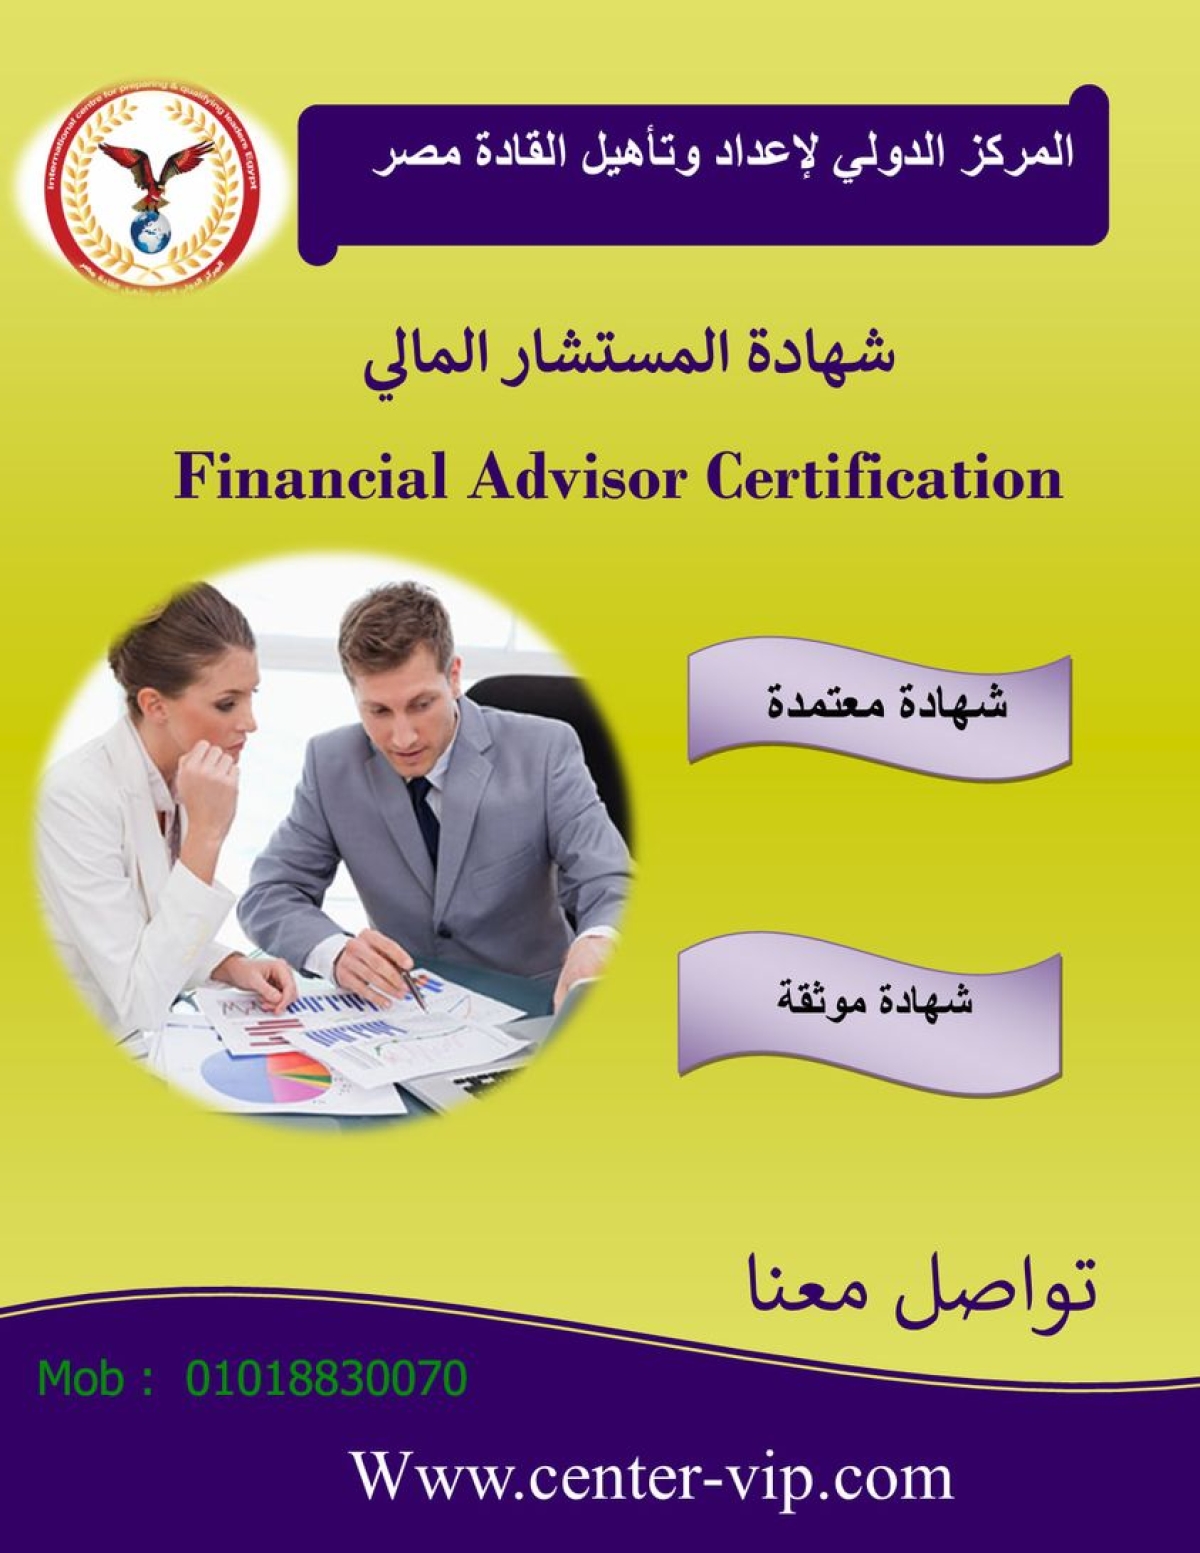 Financial advisor certification